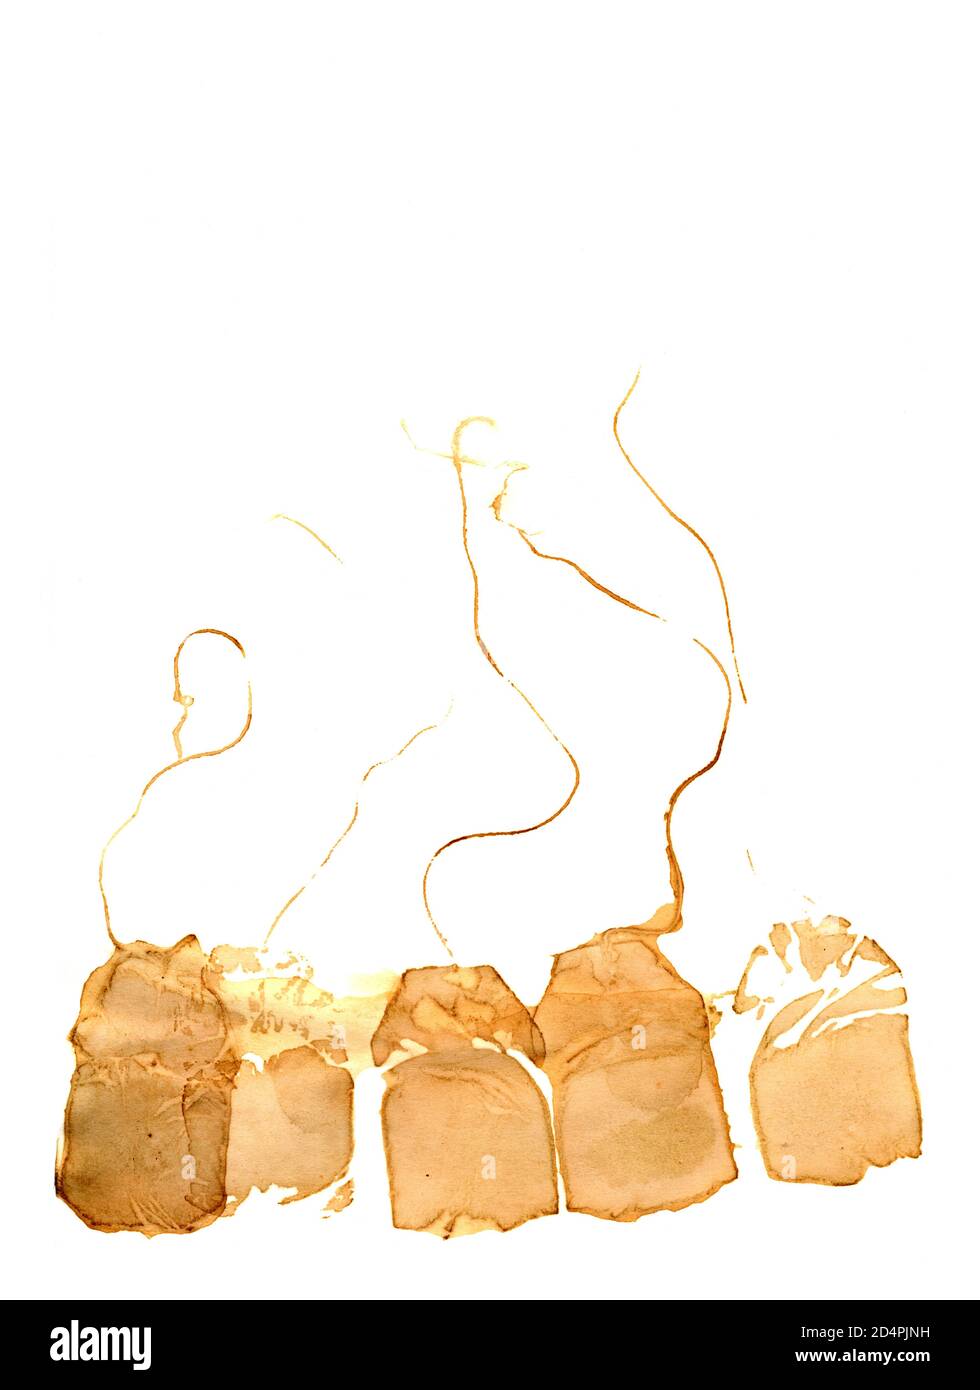 Imprint of used tea bags - breakfast Stock Photo